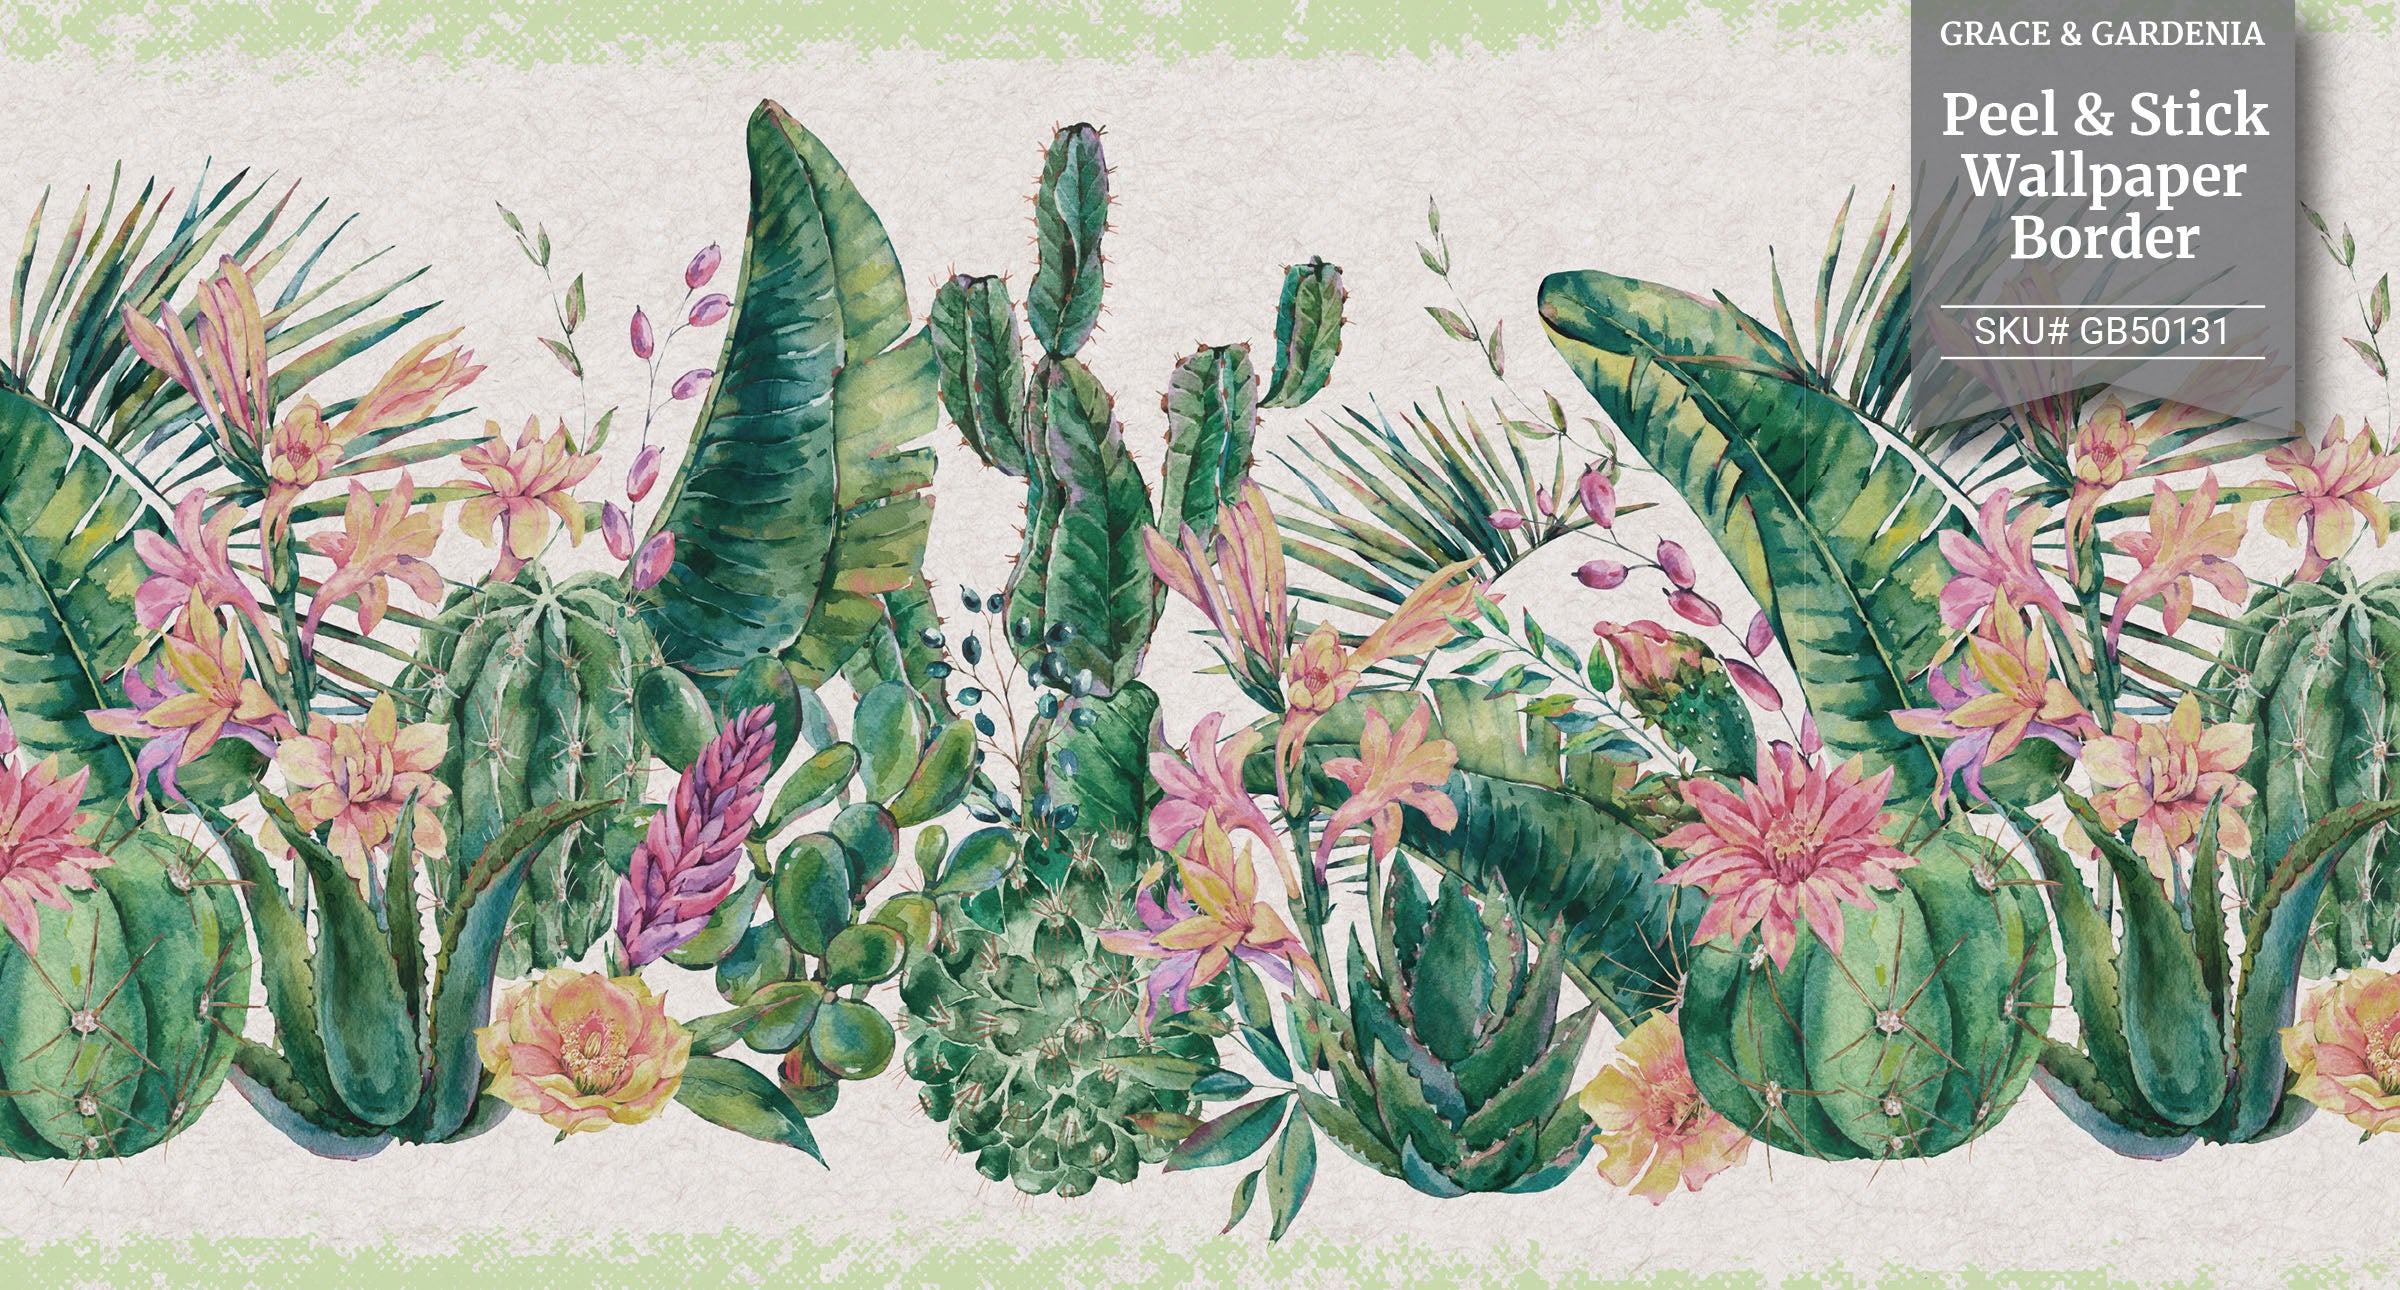 GB50131 Grace & Gardenia Cactus Flowers Peel and Stick Wallpaper Border 10